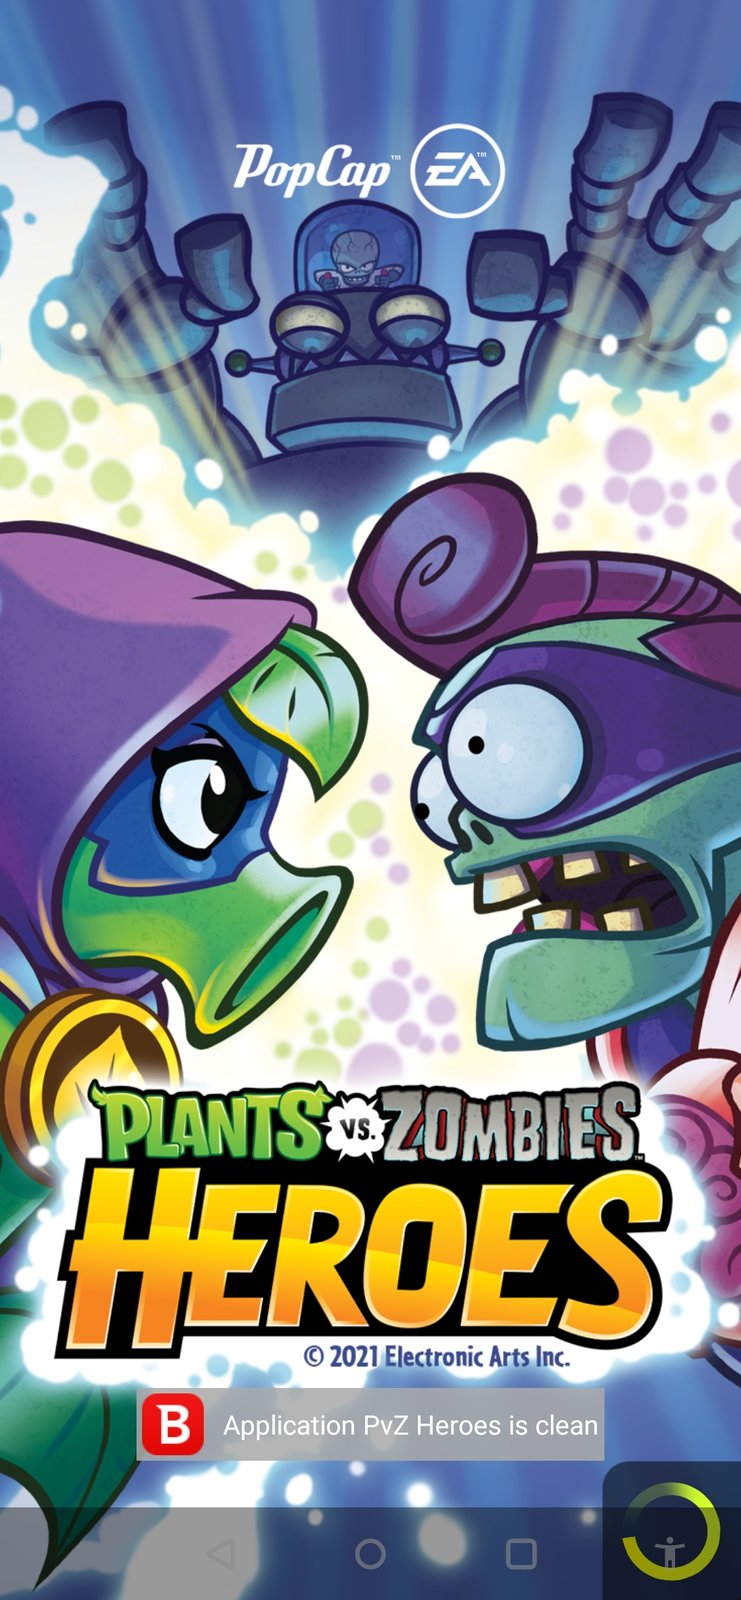 Download Plants vs Zombies MOD APK v1.0.0 (Mod Menu) For Android